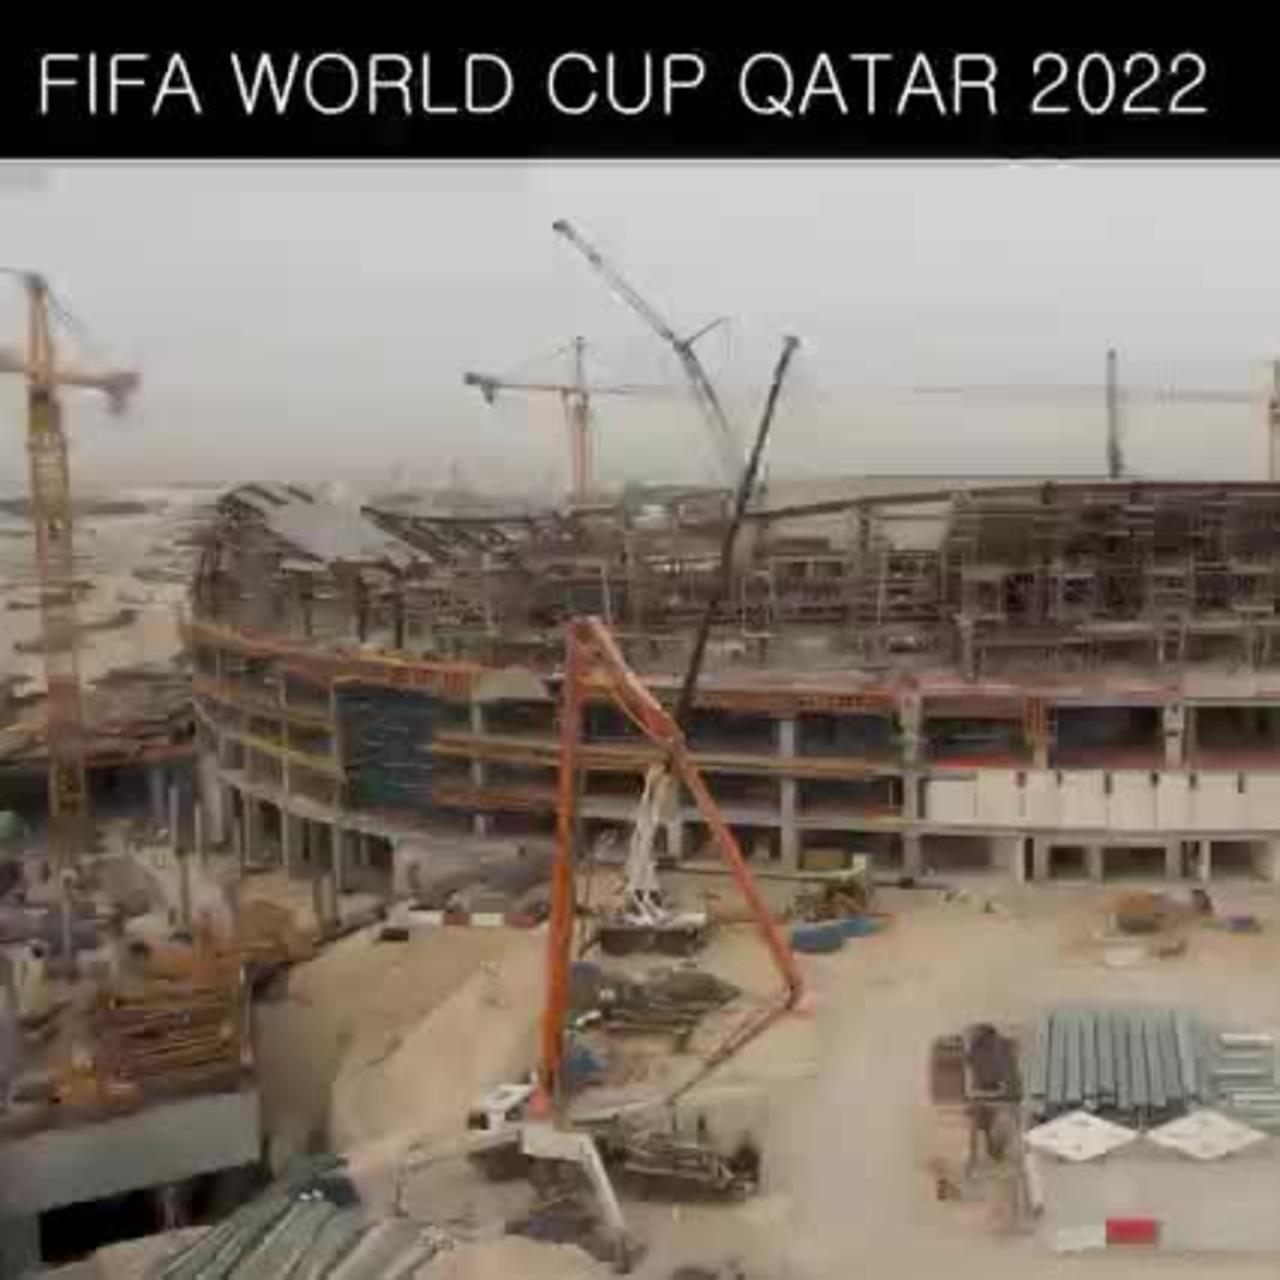 Qatar's Preparation for Fifa World Cup 2022